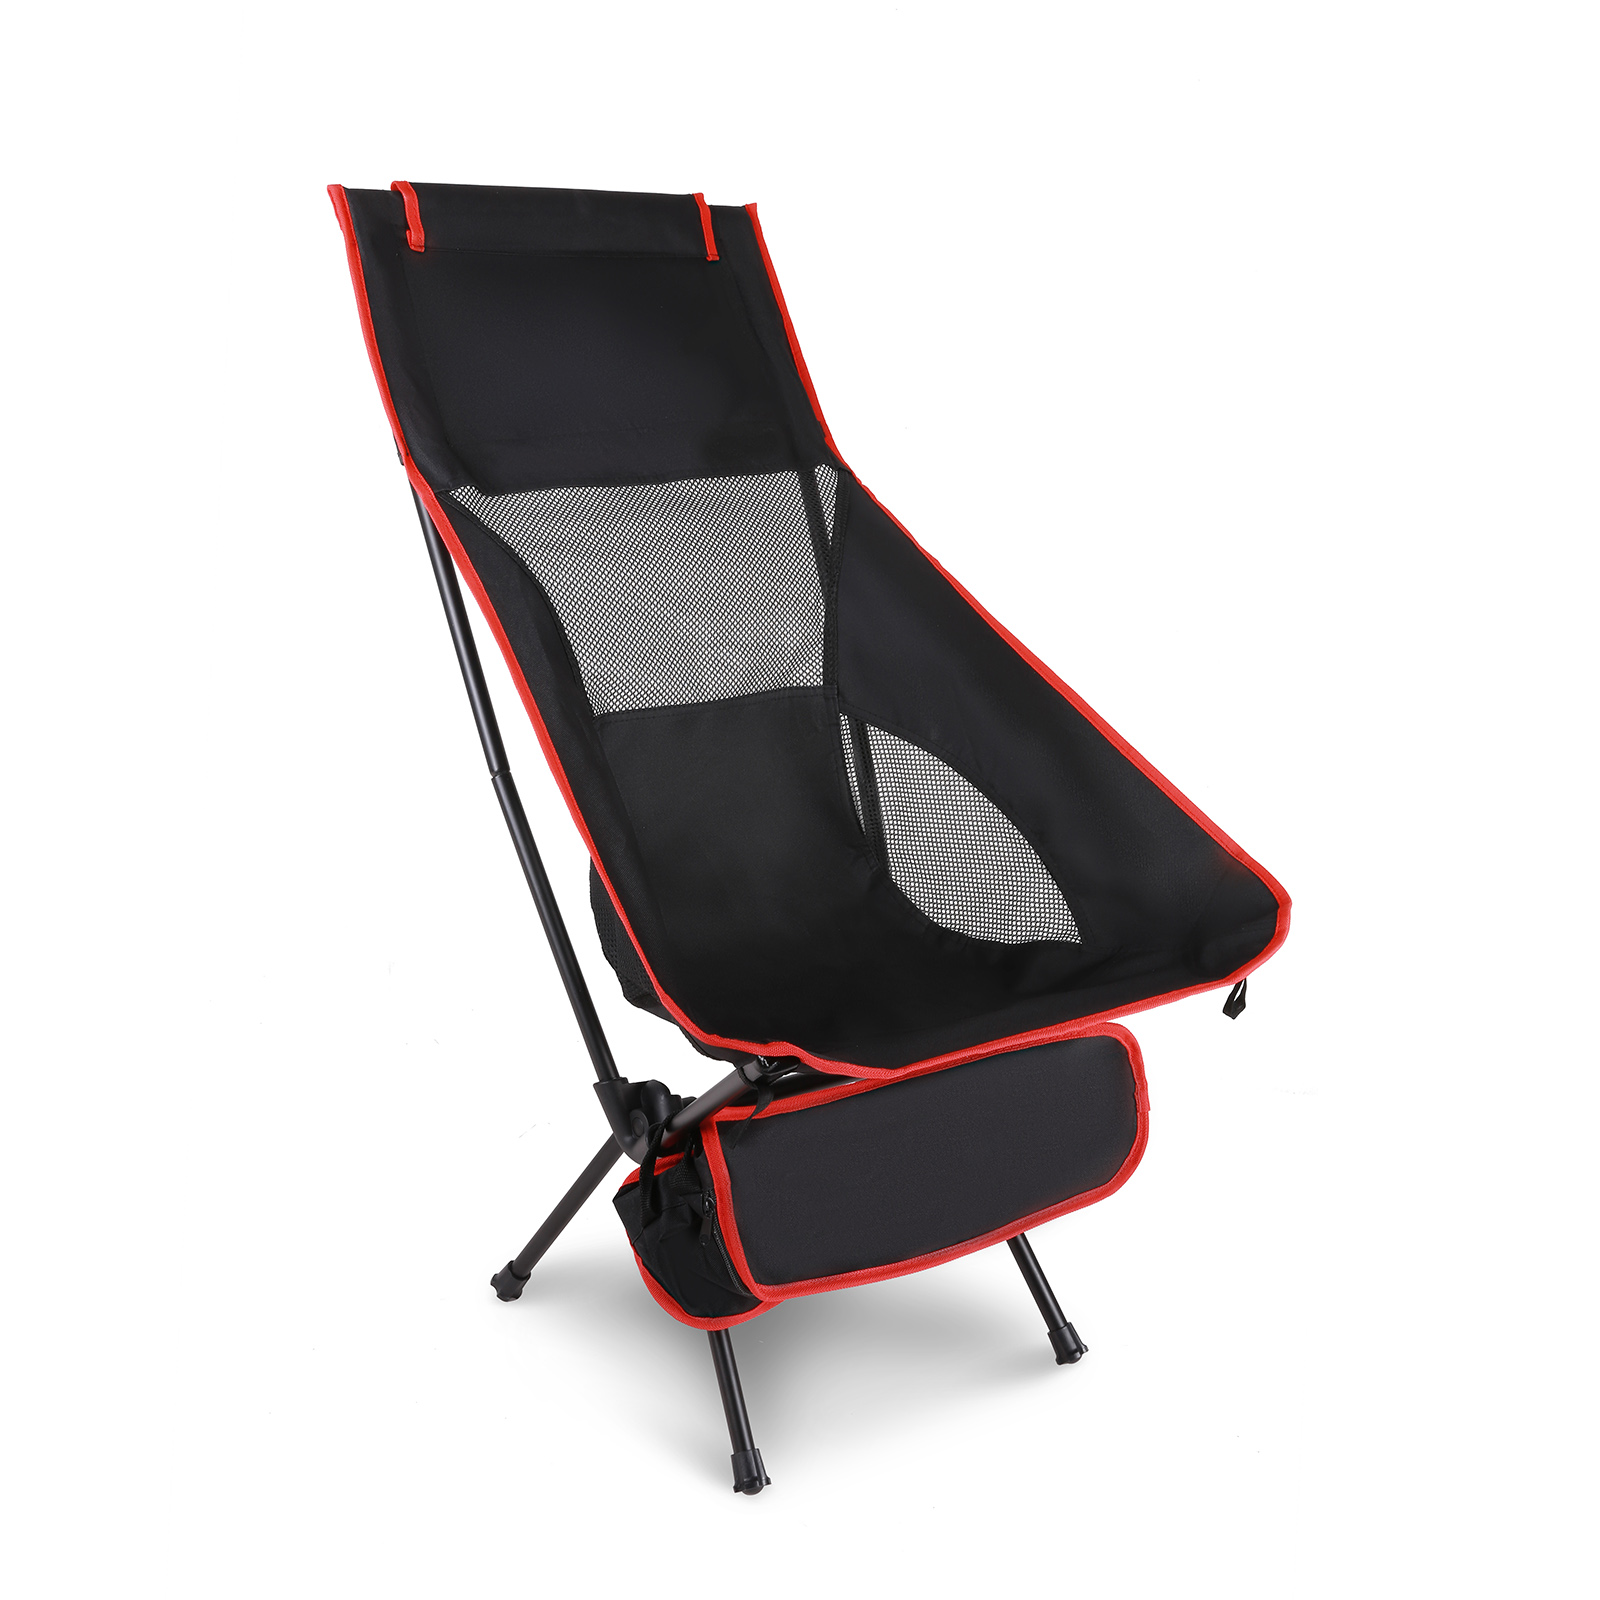 Portable Camping Mesh Chair